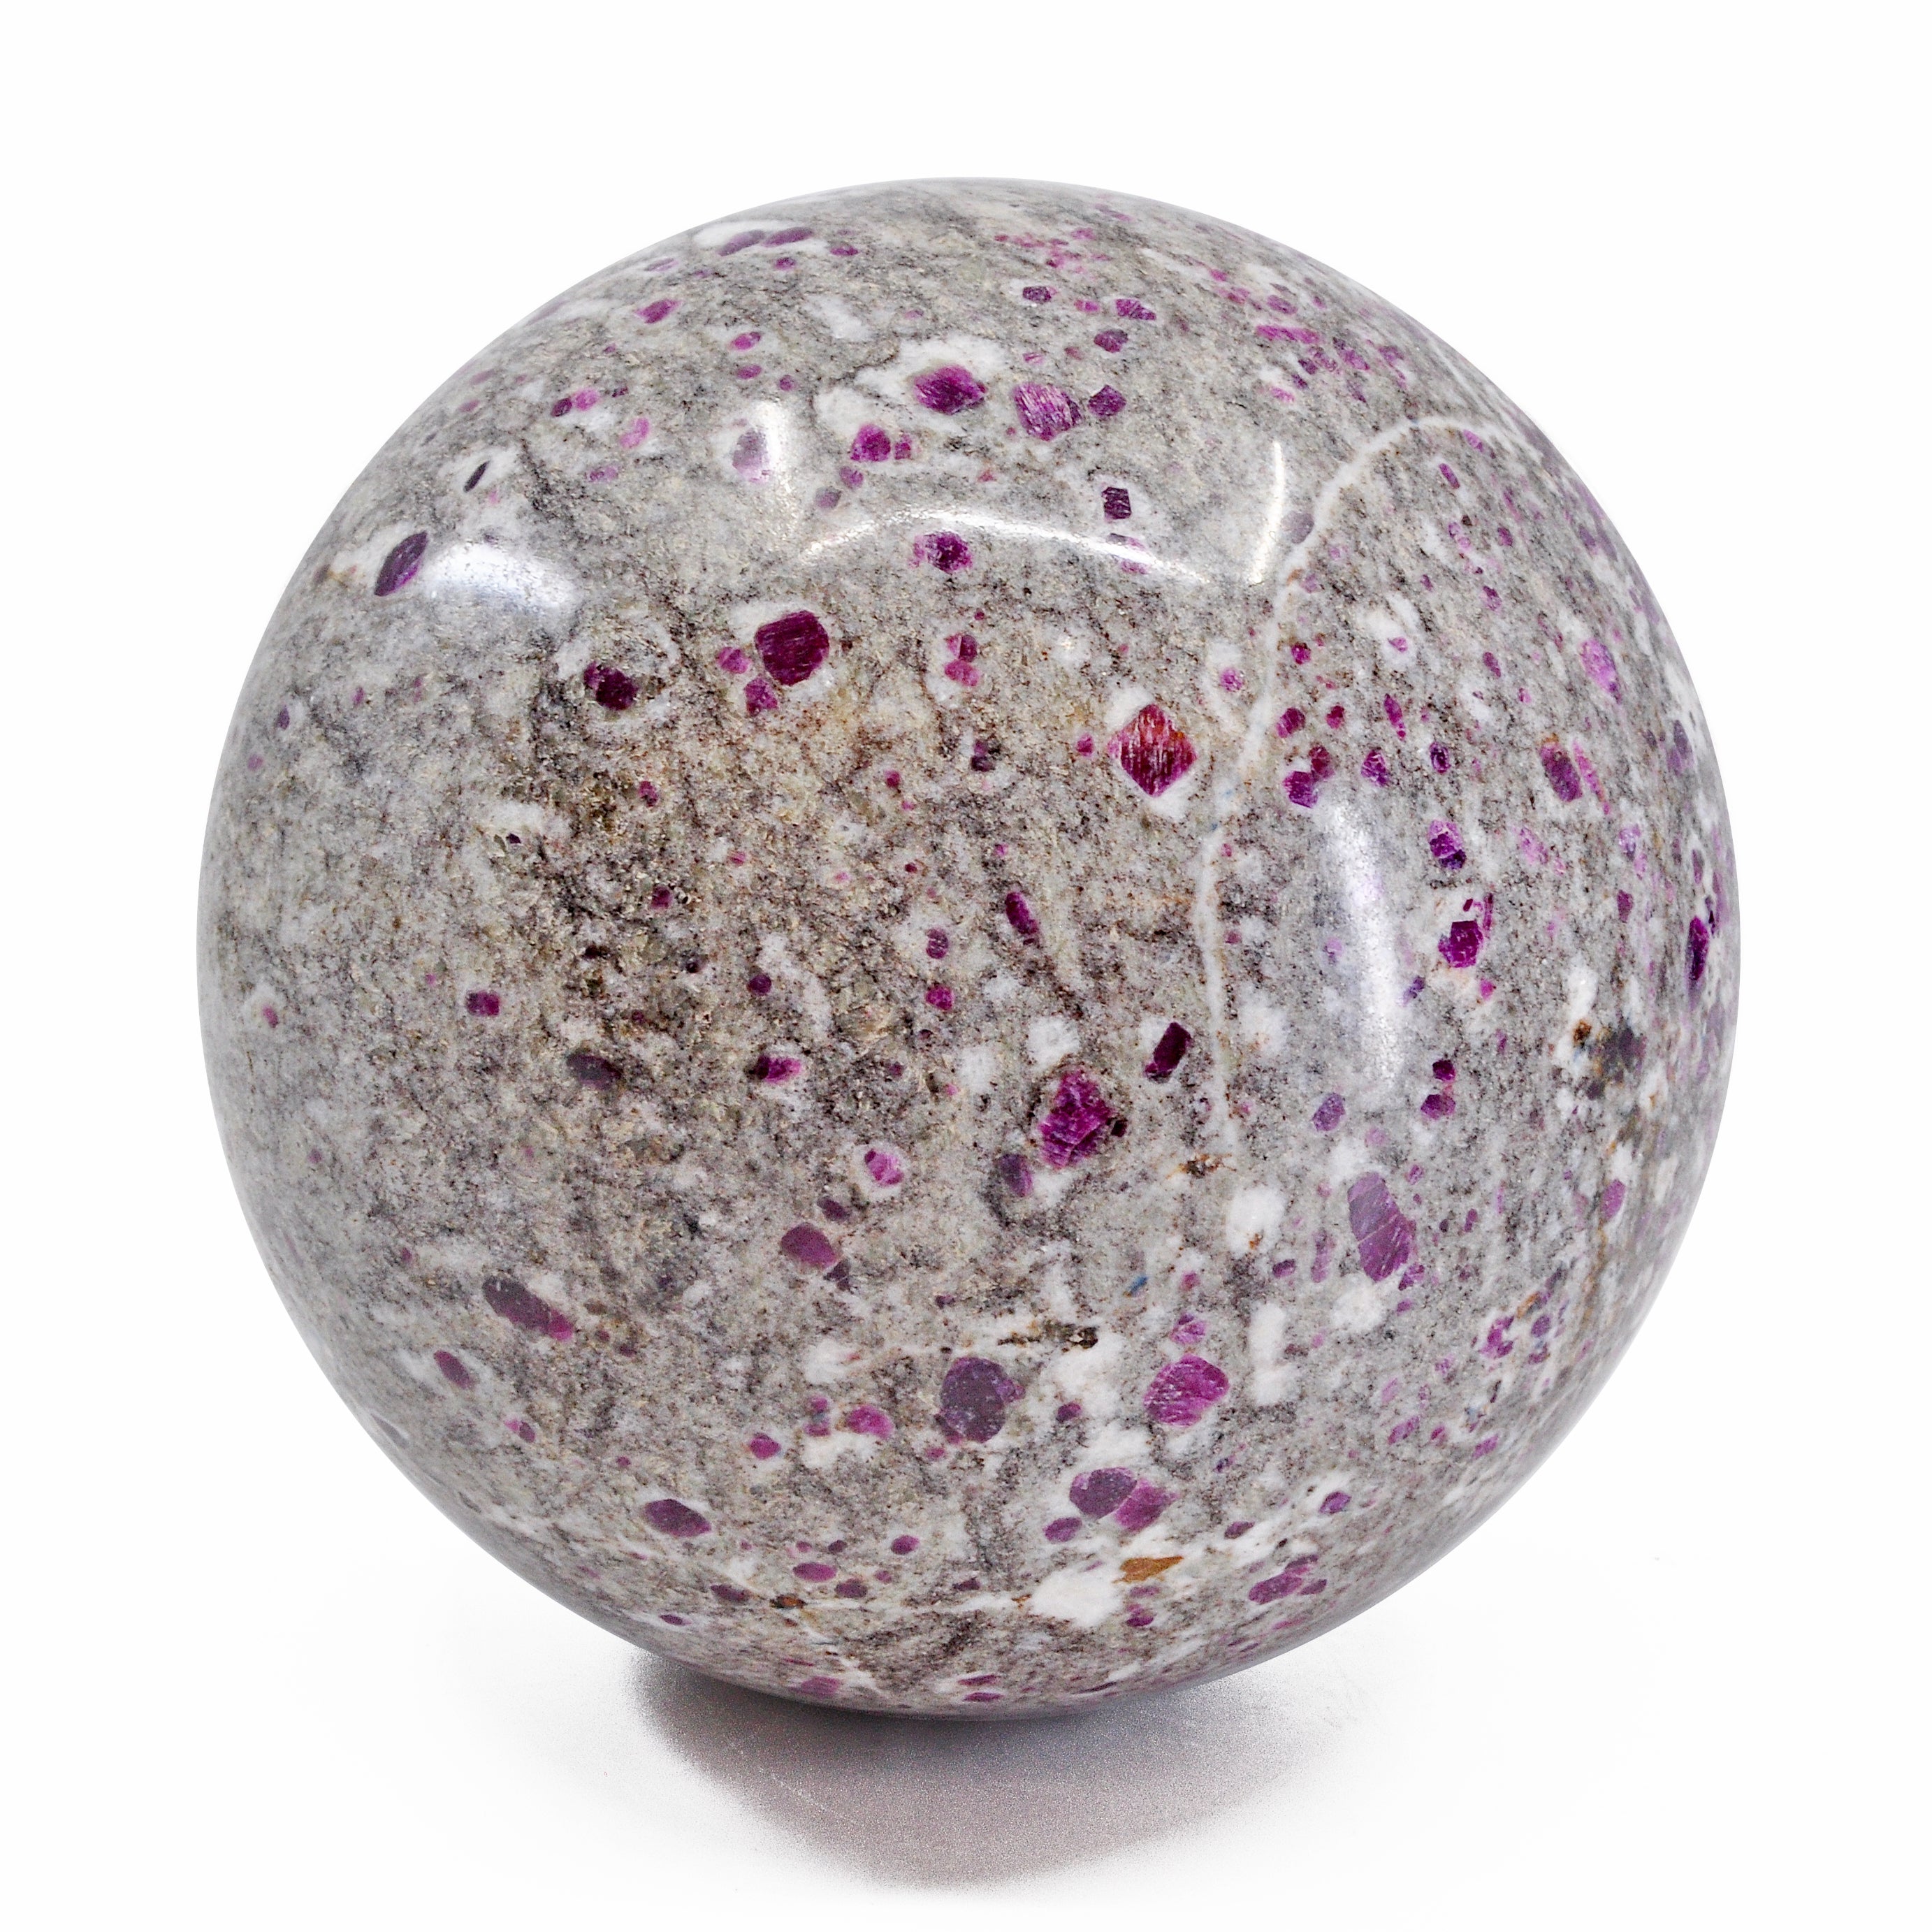 Ruby Crystals in Matrix 4.7 inch 6.17 lb Natural Crystal Sphere - India - ZL-185 - Crystalarium